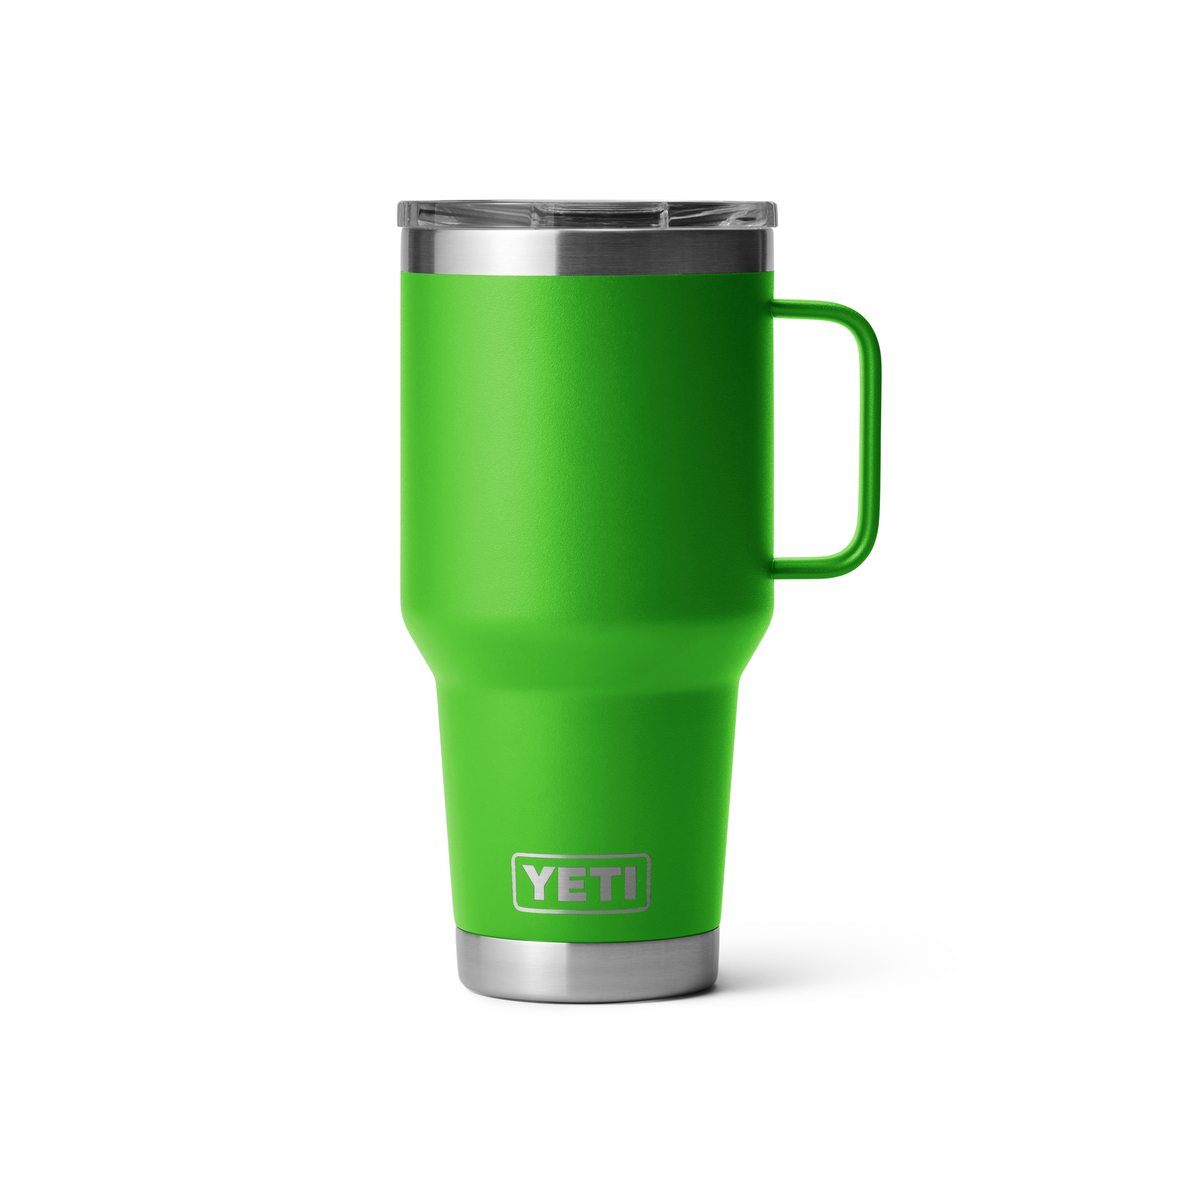 Yeti Rambler 30 Travel Mug